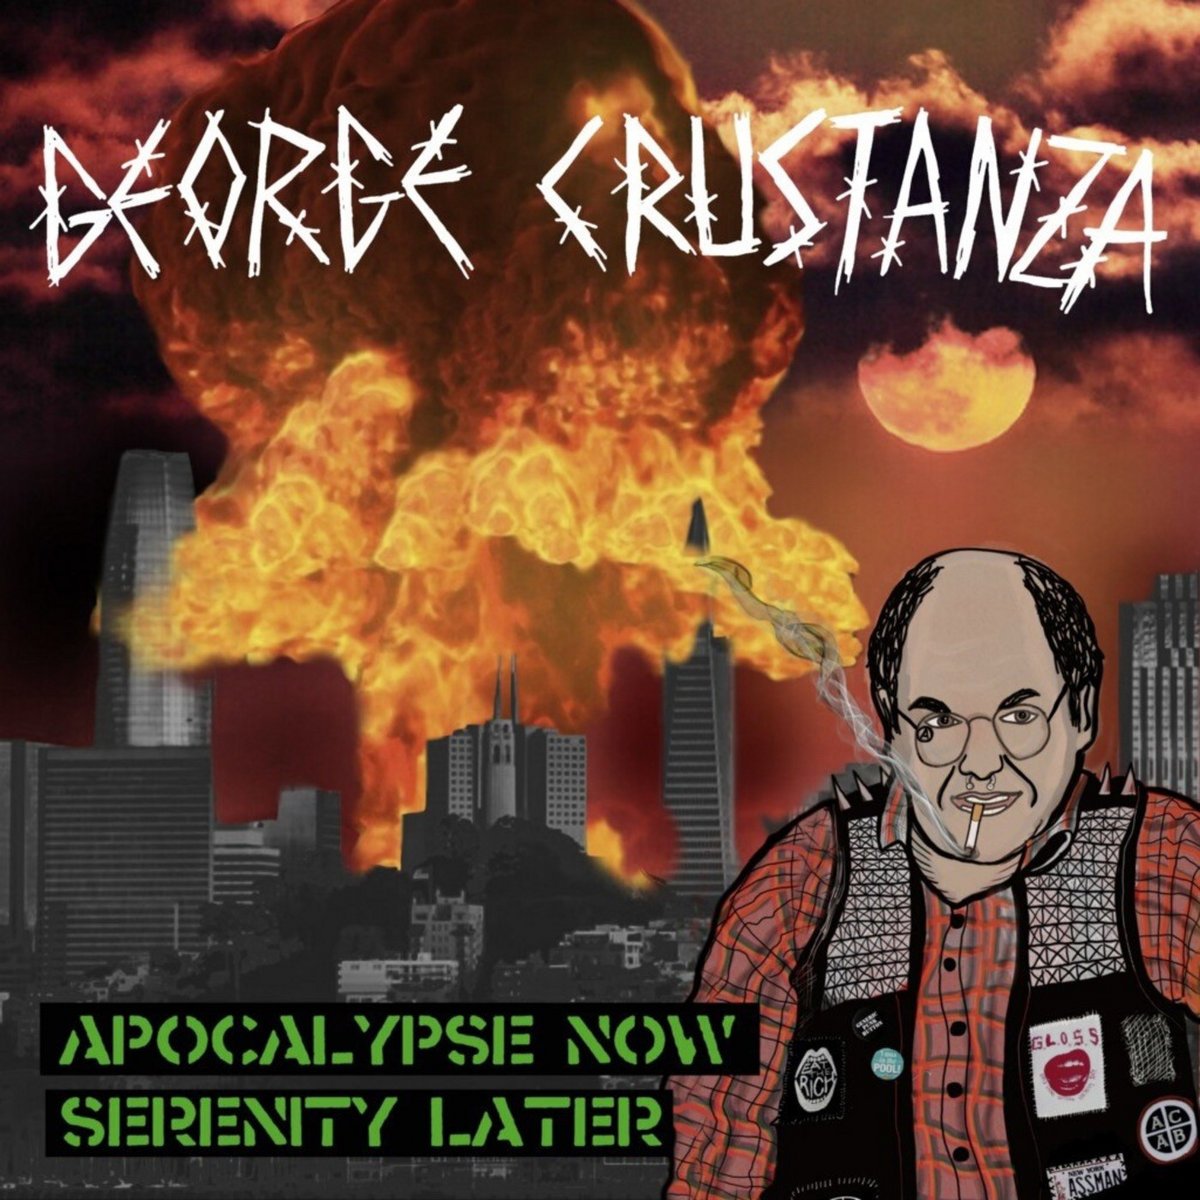 George Crustanza - Apocalypse Now, Serenity Later